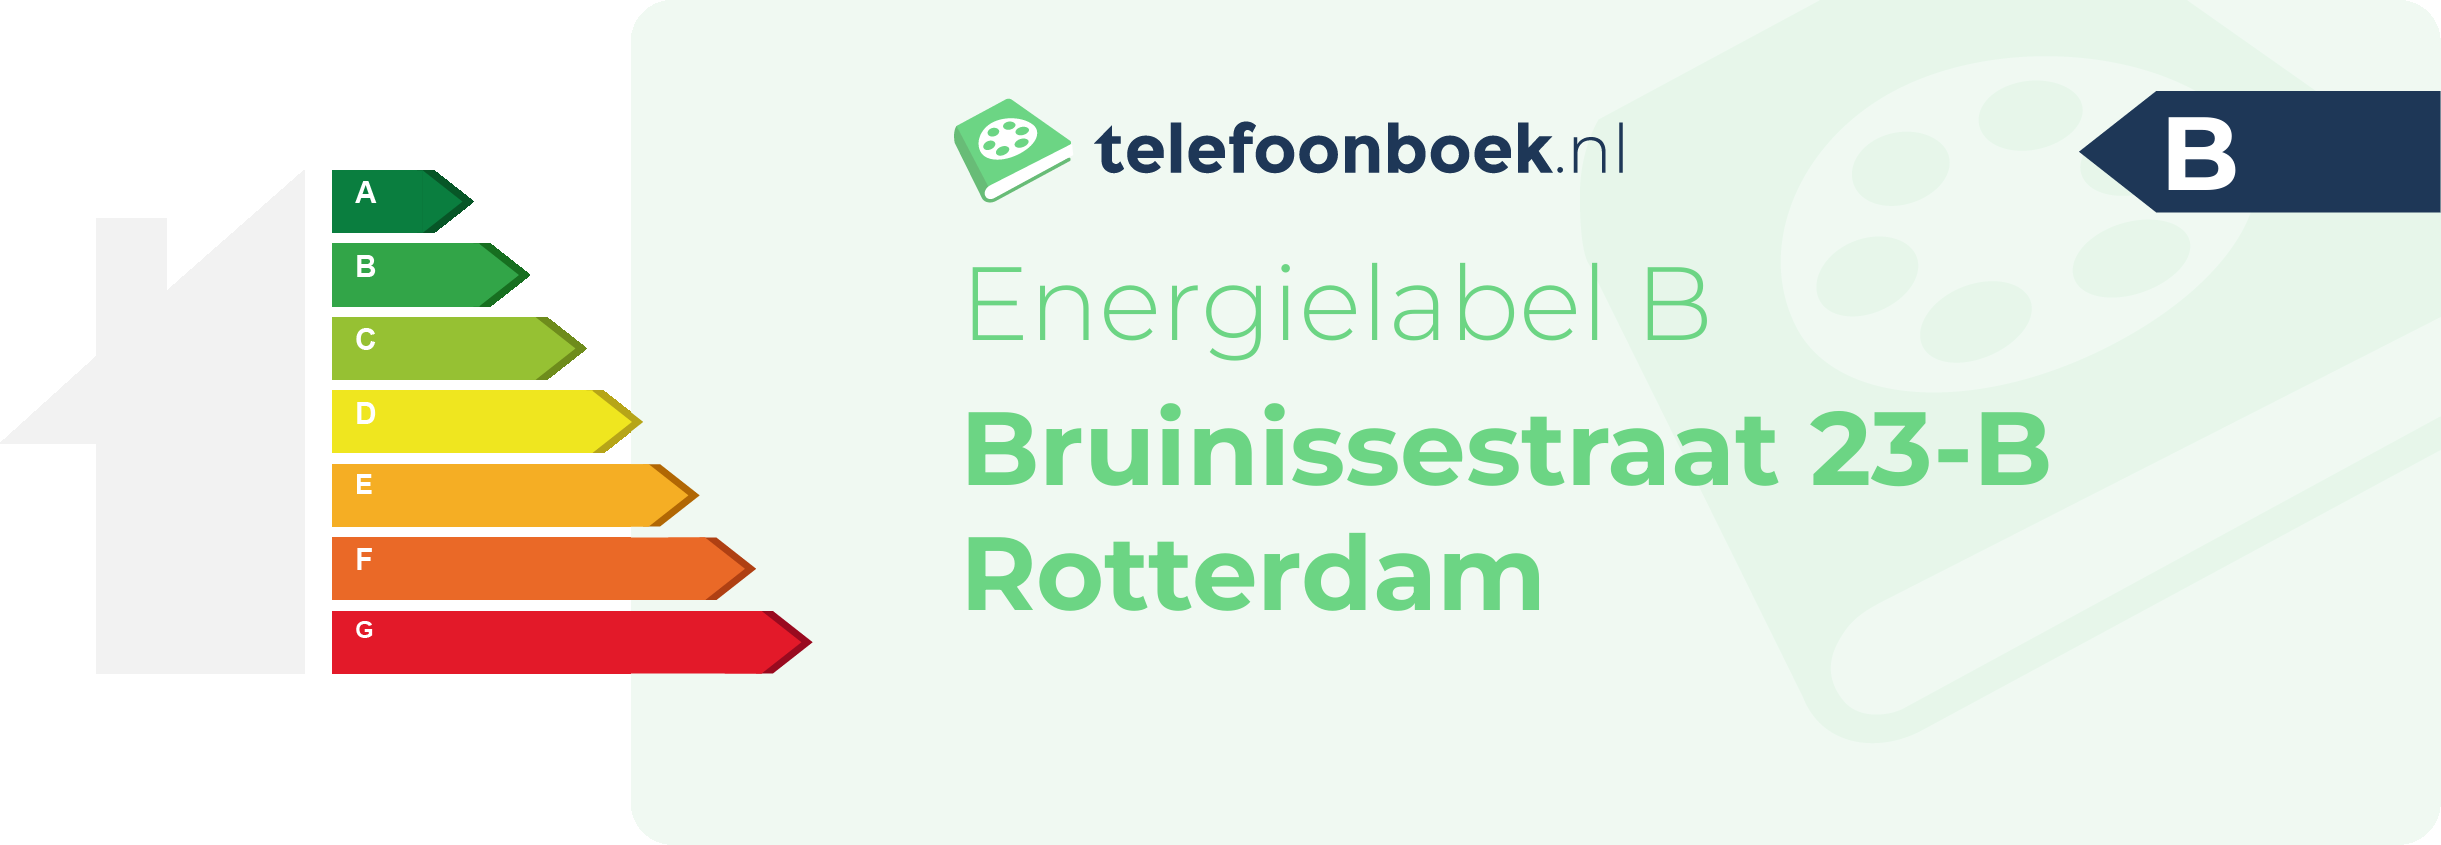 Energielabel Bruinissestraat 23-B Rotterdam